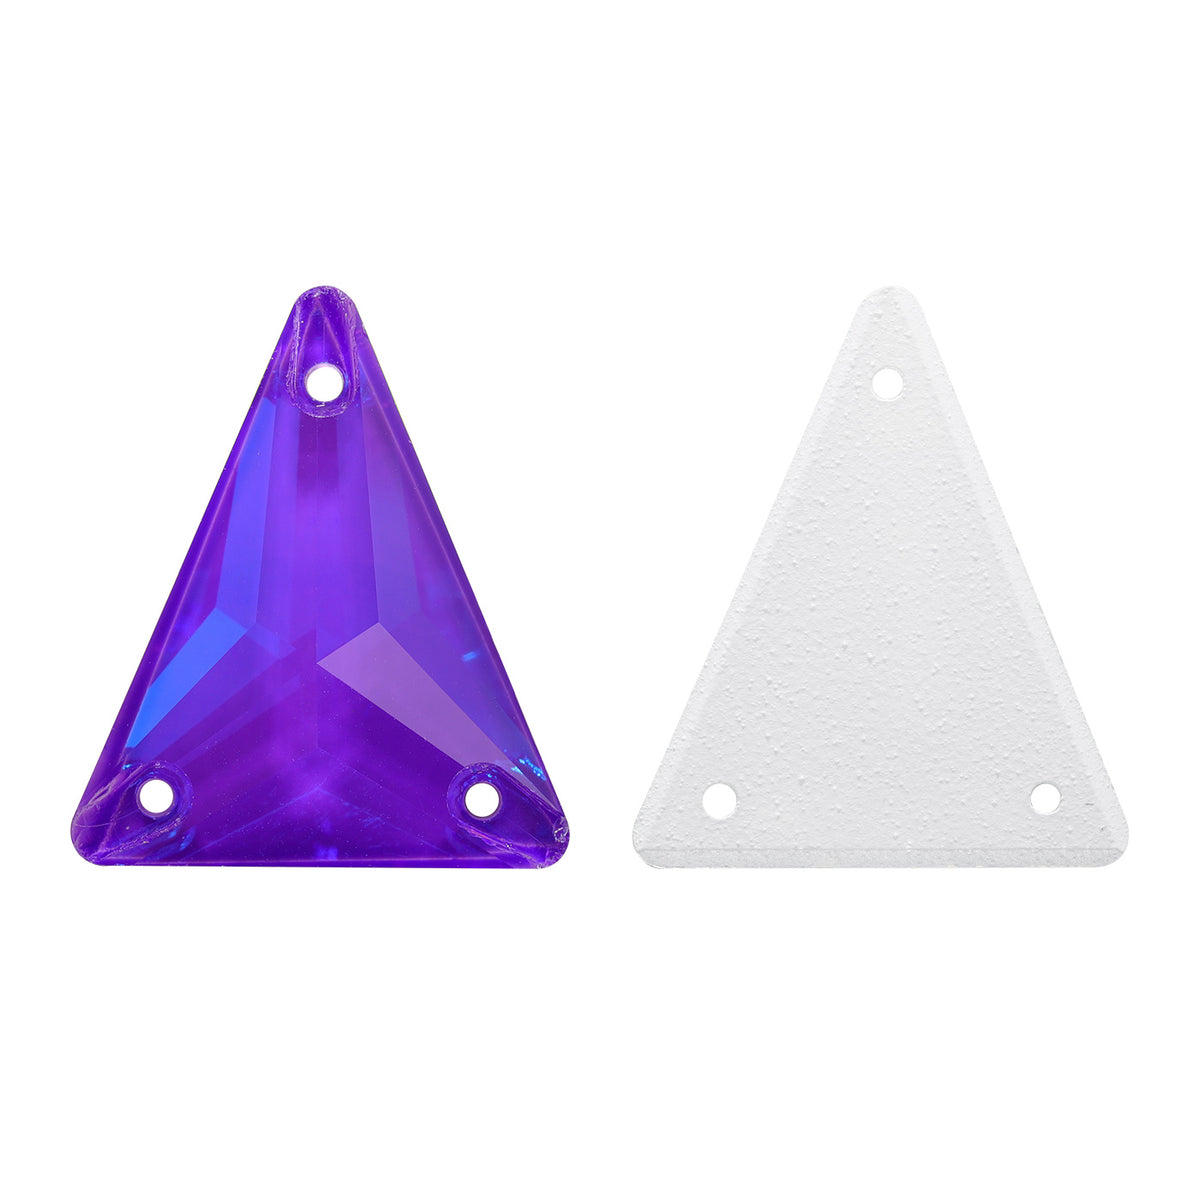 Electric Neon Violet Slim Triangle Shape High Quality Glass Sew-on Rhinestones